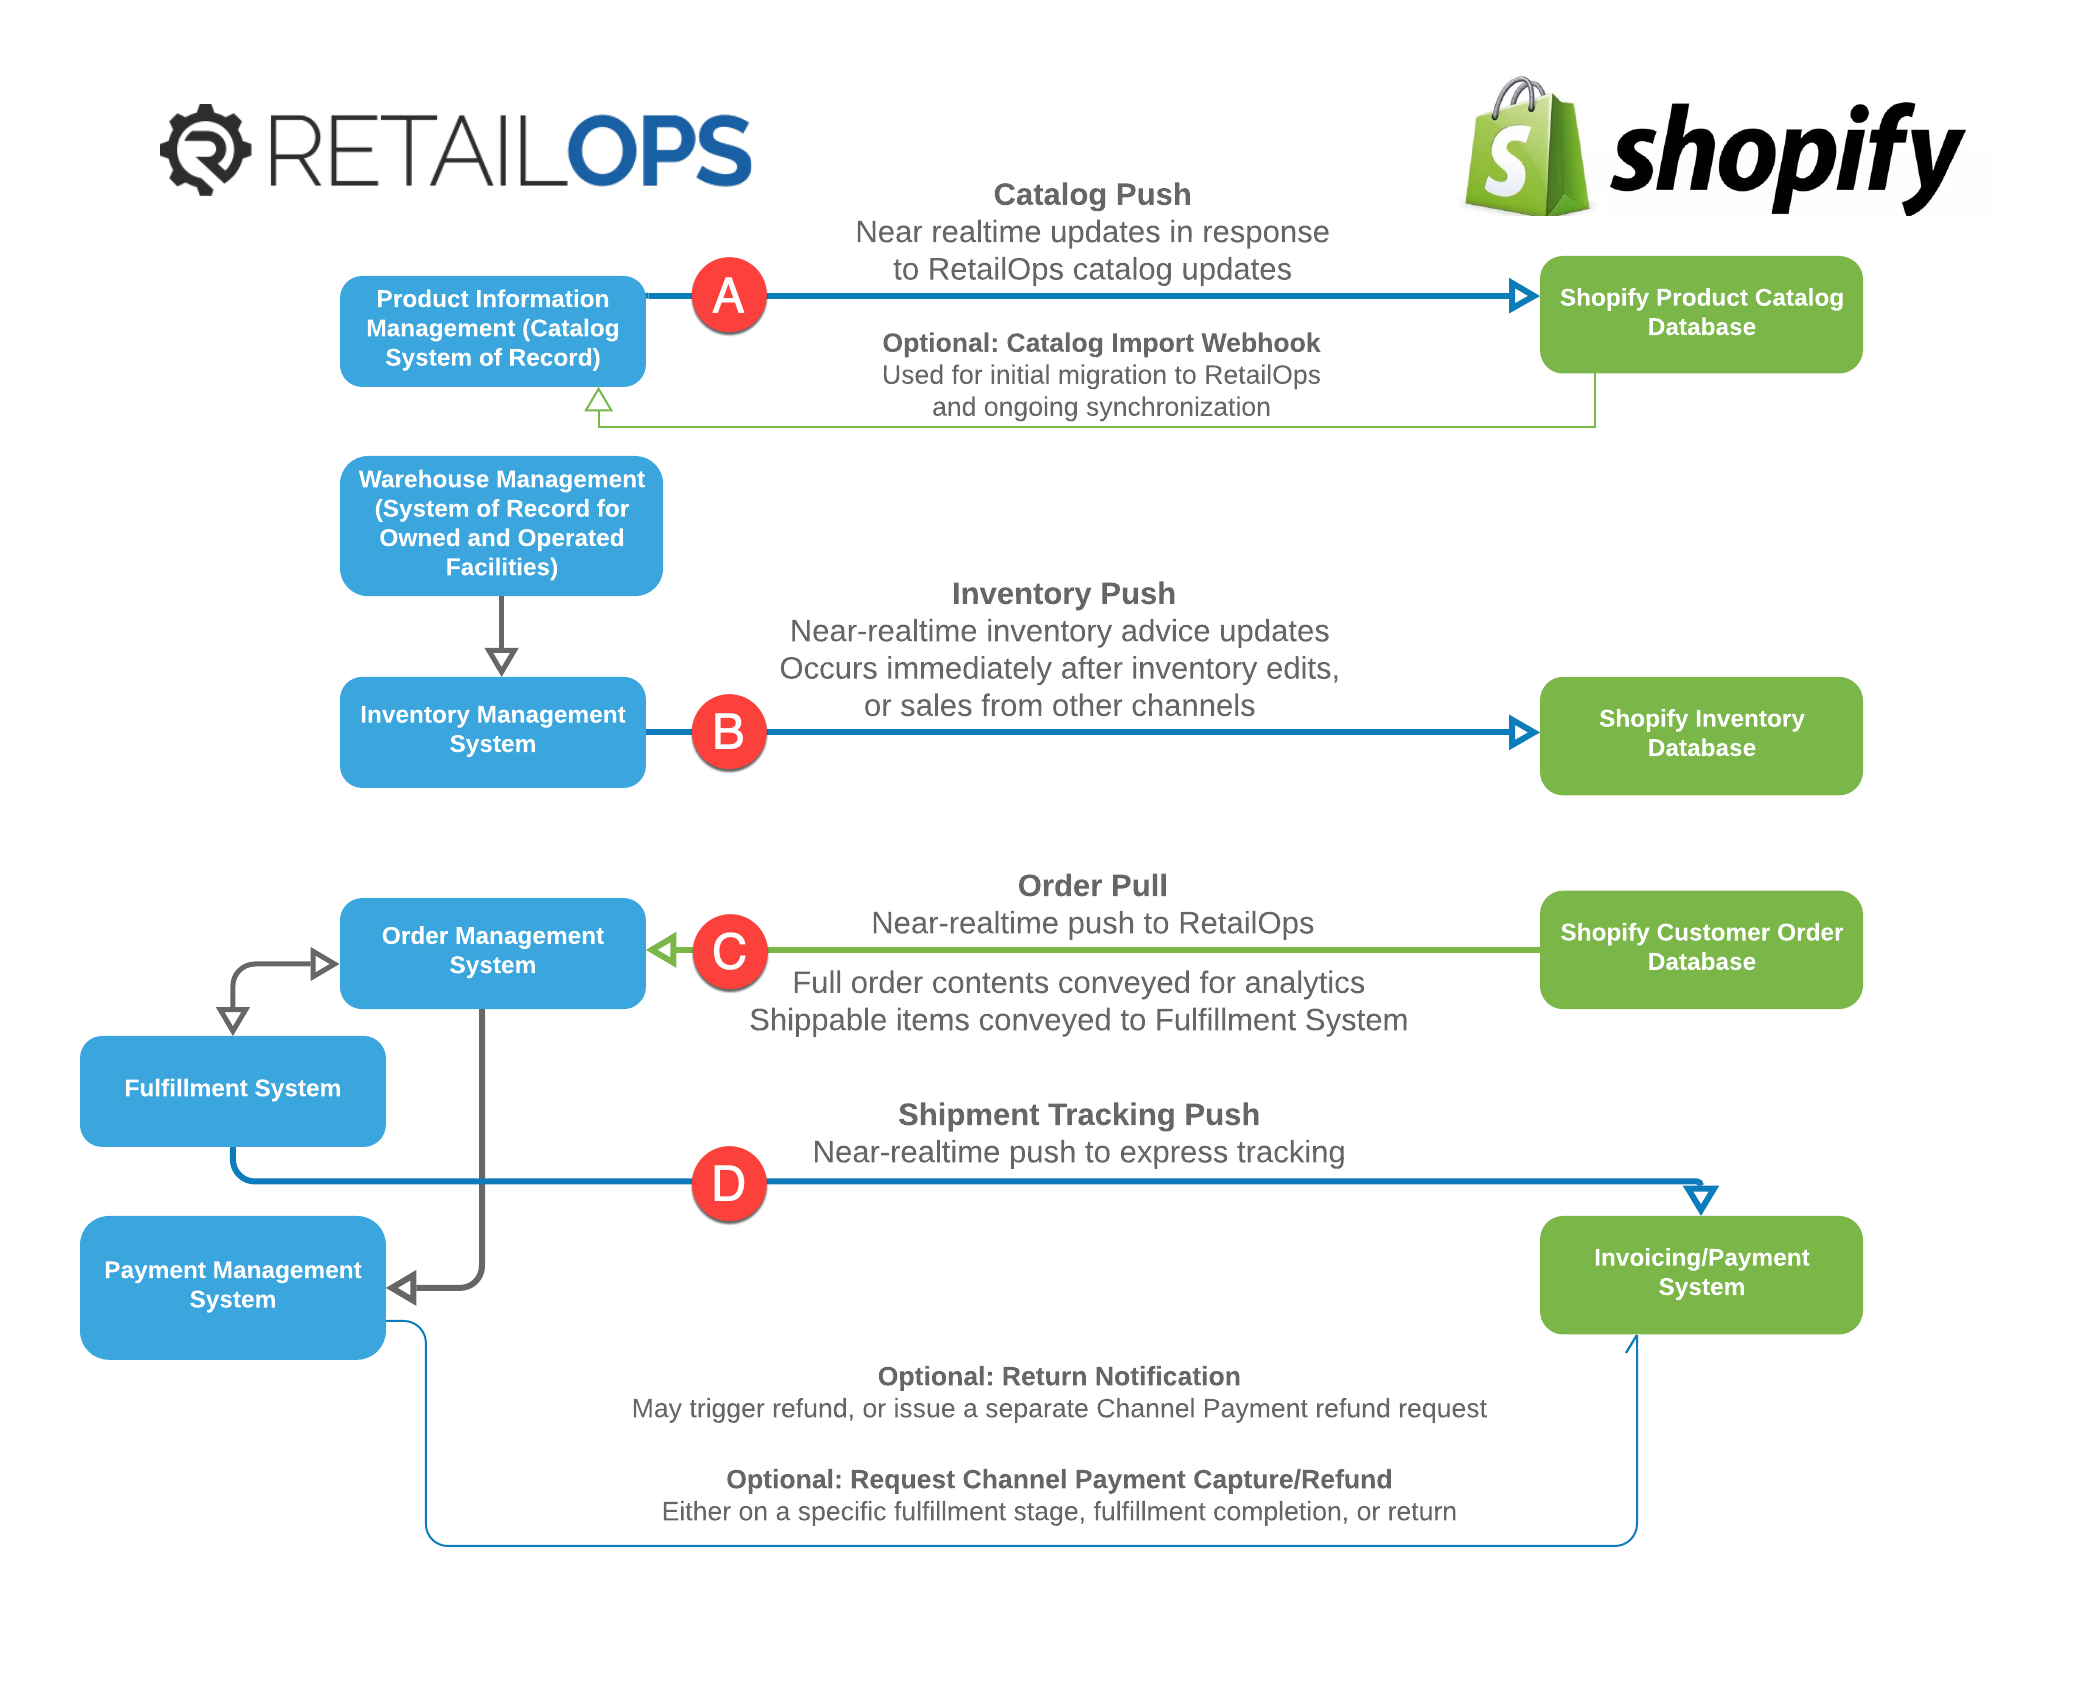 RetailOps_Shopify_Interactions.jpg